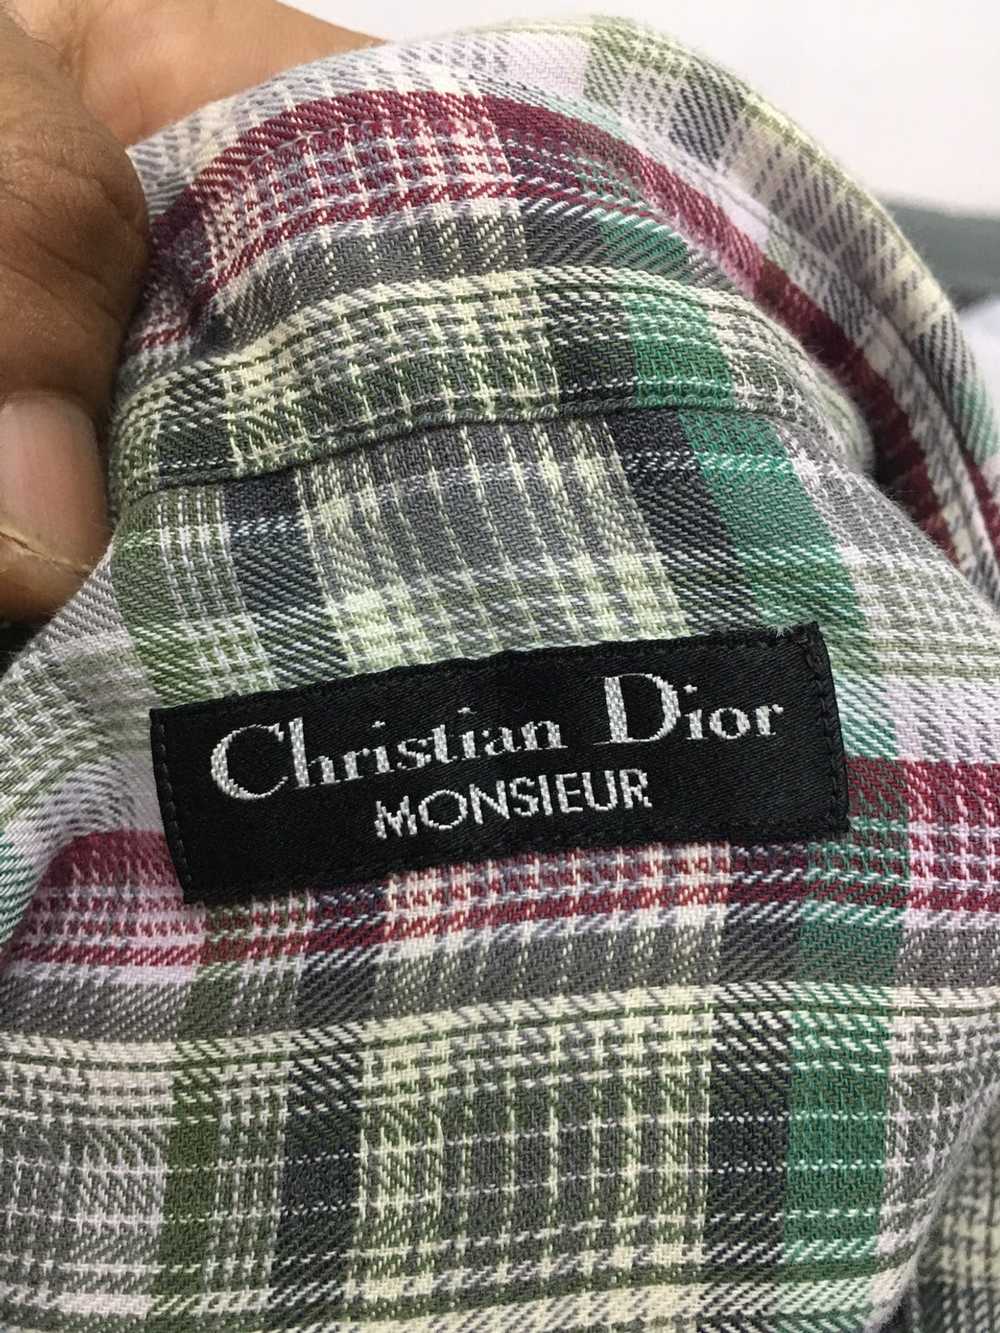 Christian Dior Monsieur Flannel CD - image 5